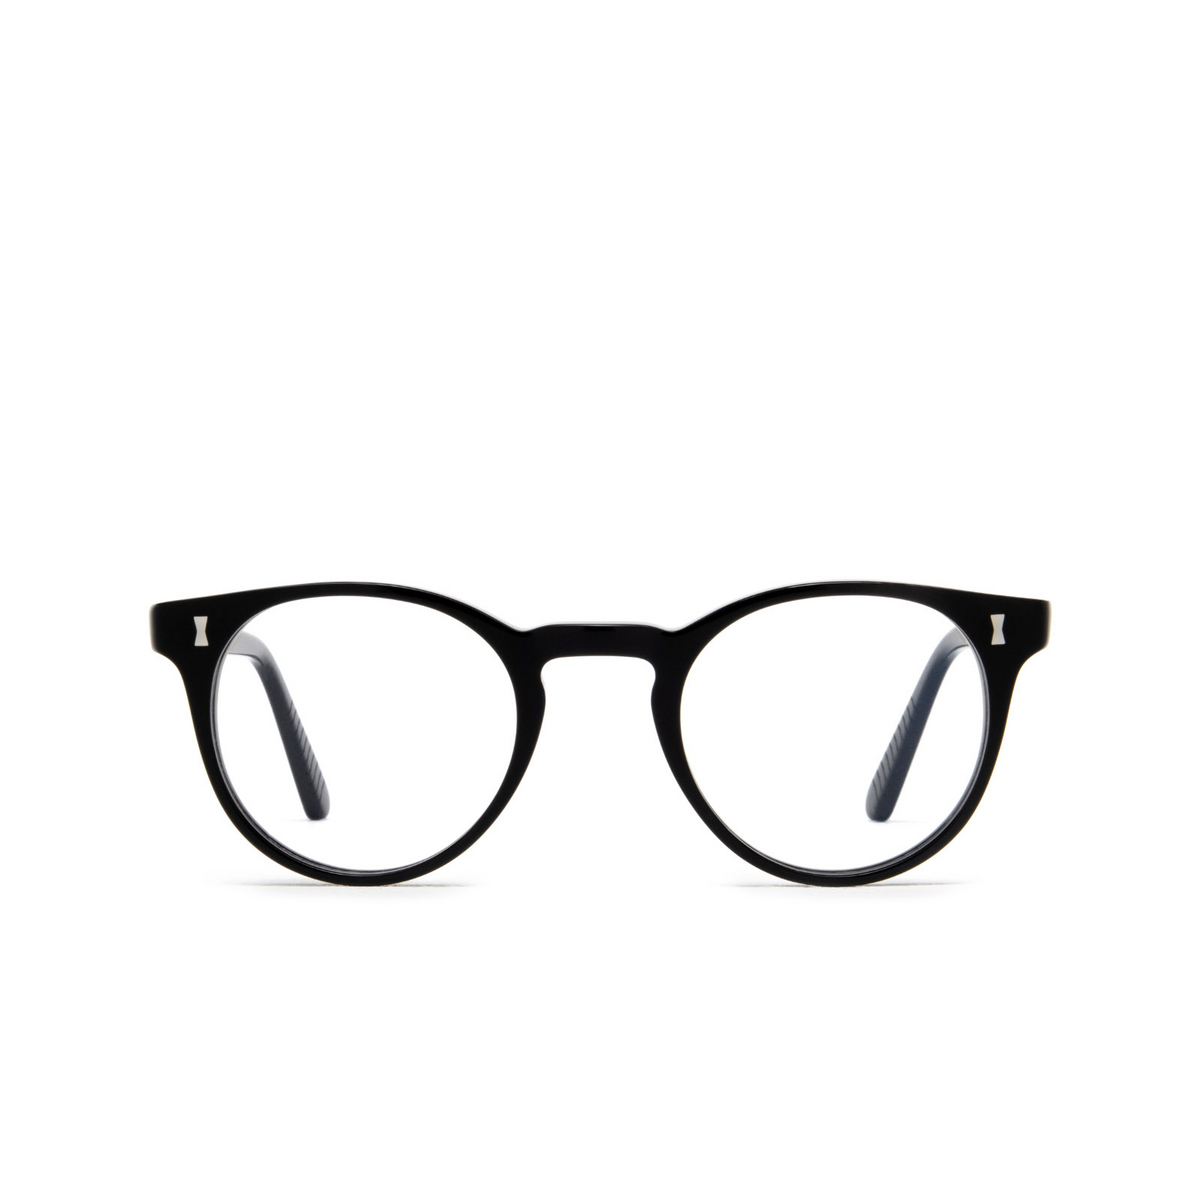 Cubitts HERBRAND Eyeglasses HER-R-BLA Black - front view